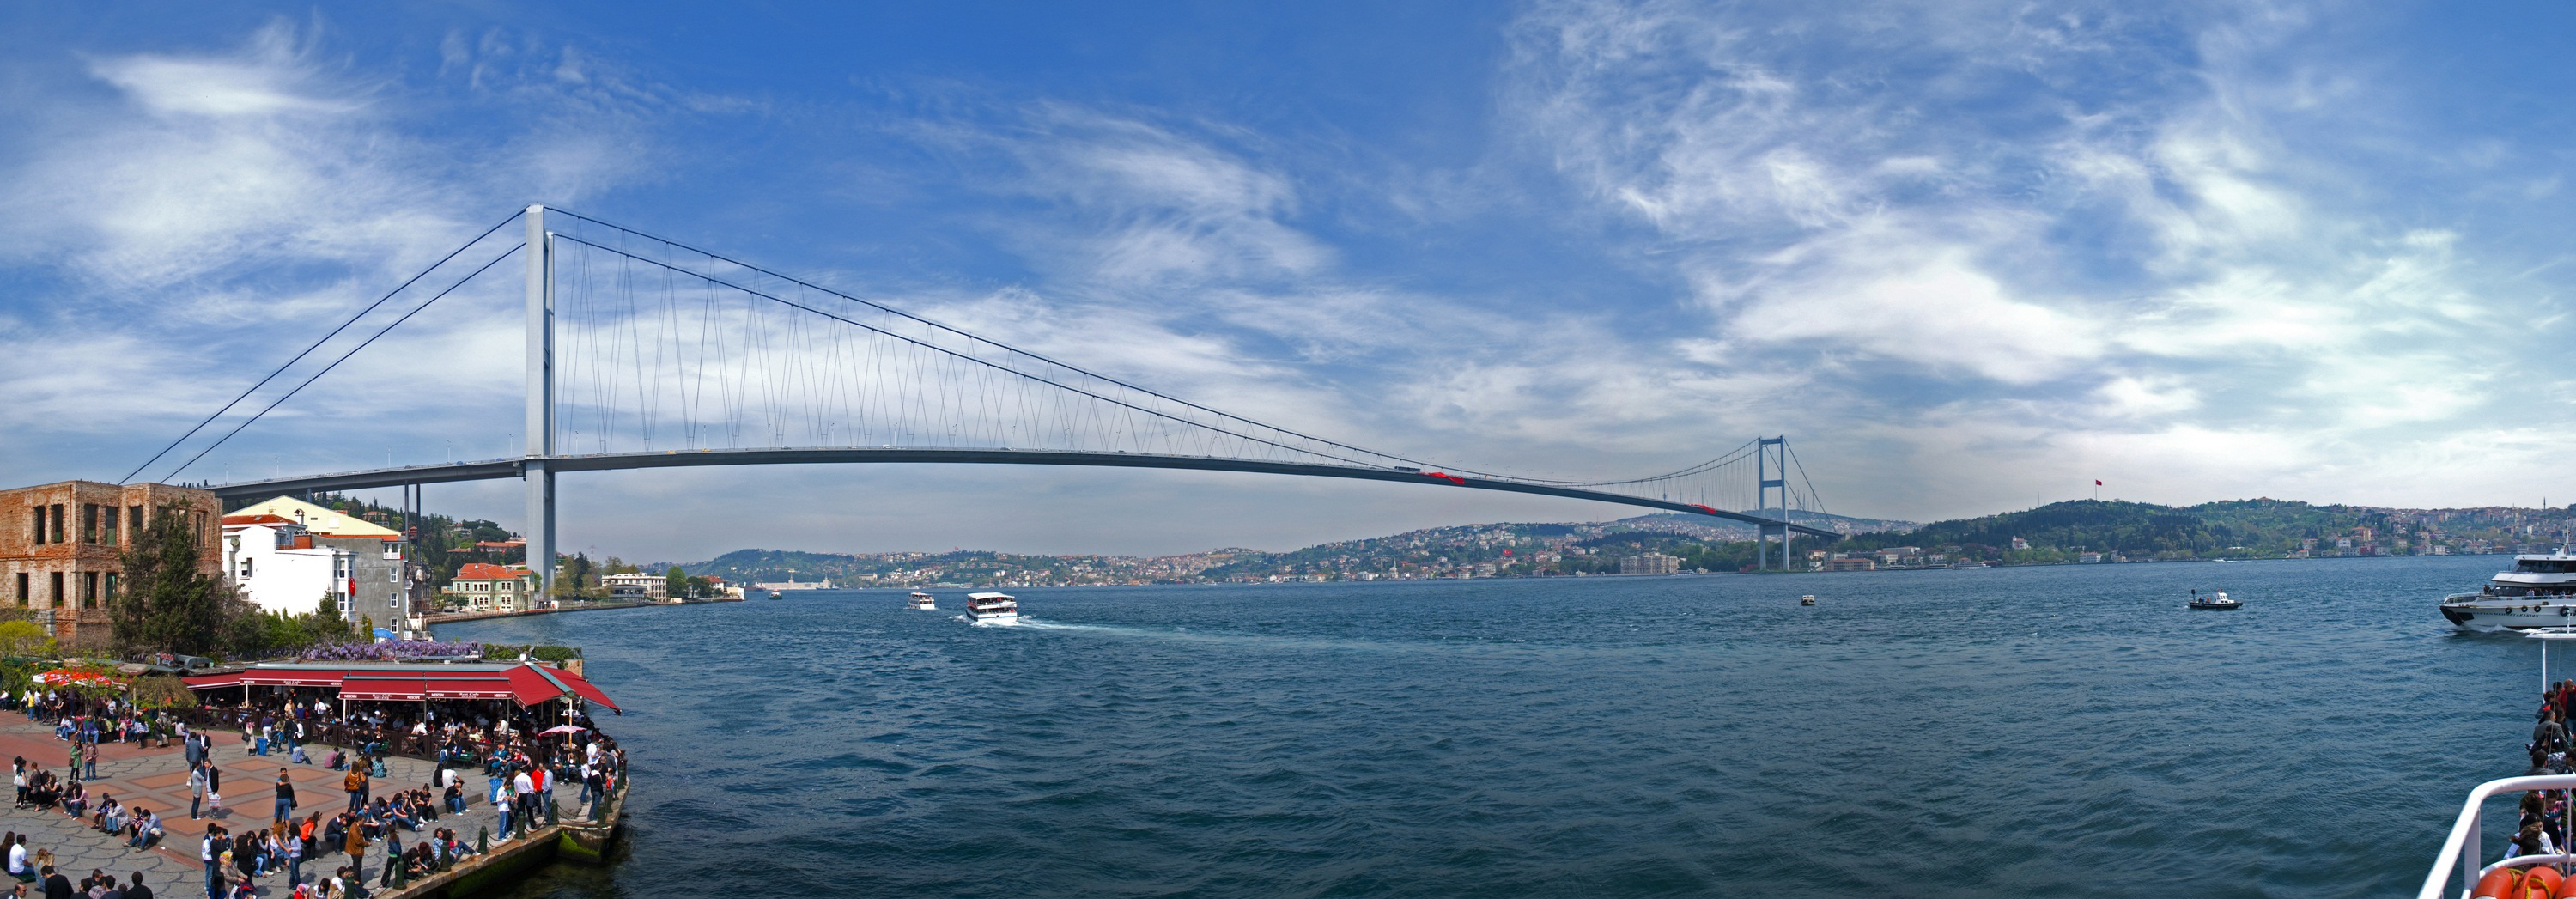 Bosphorus Bridge #20